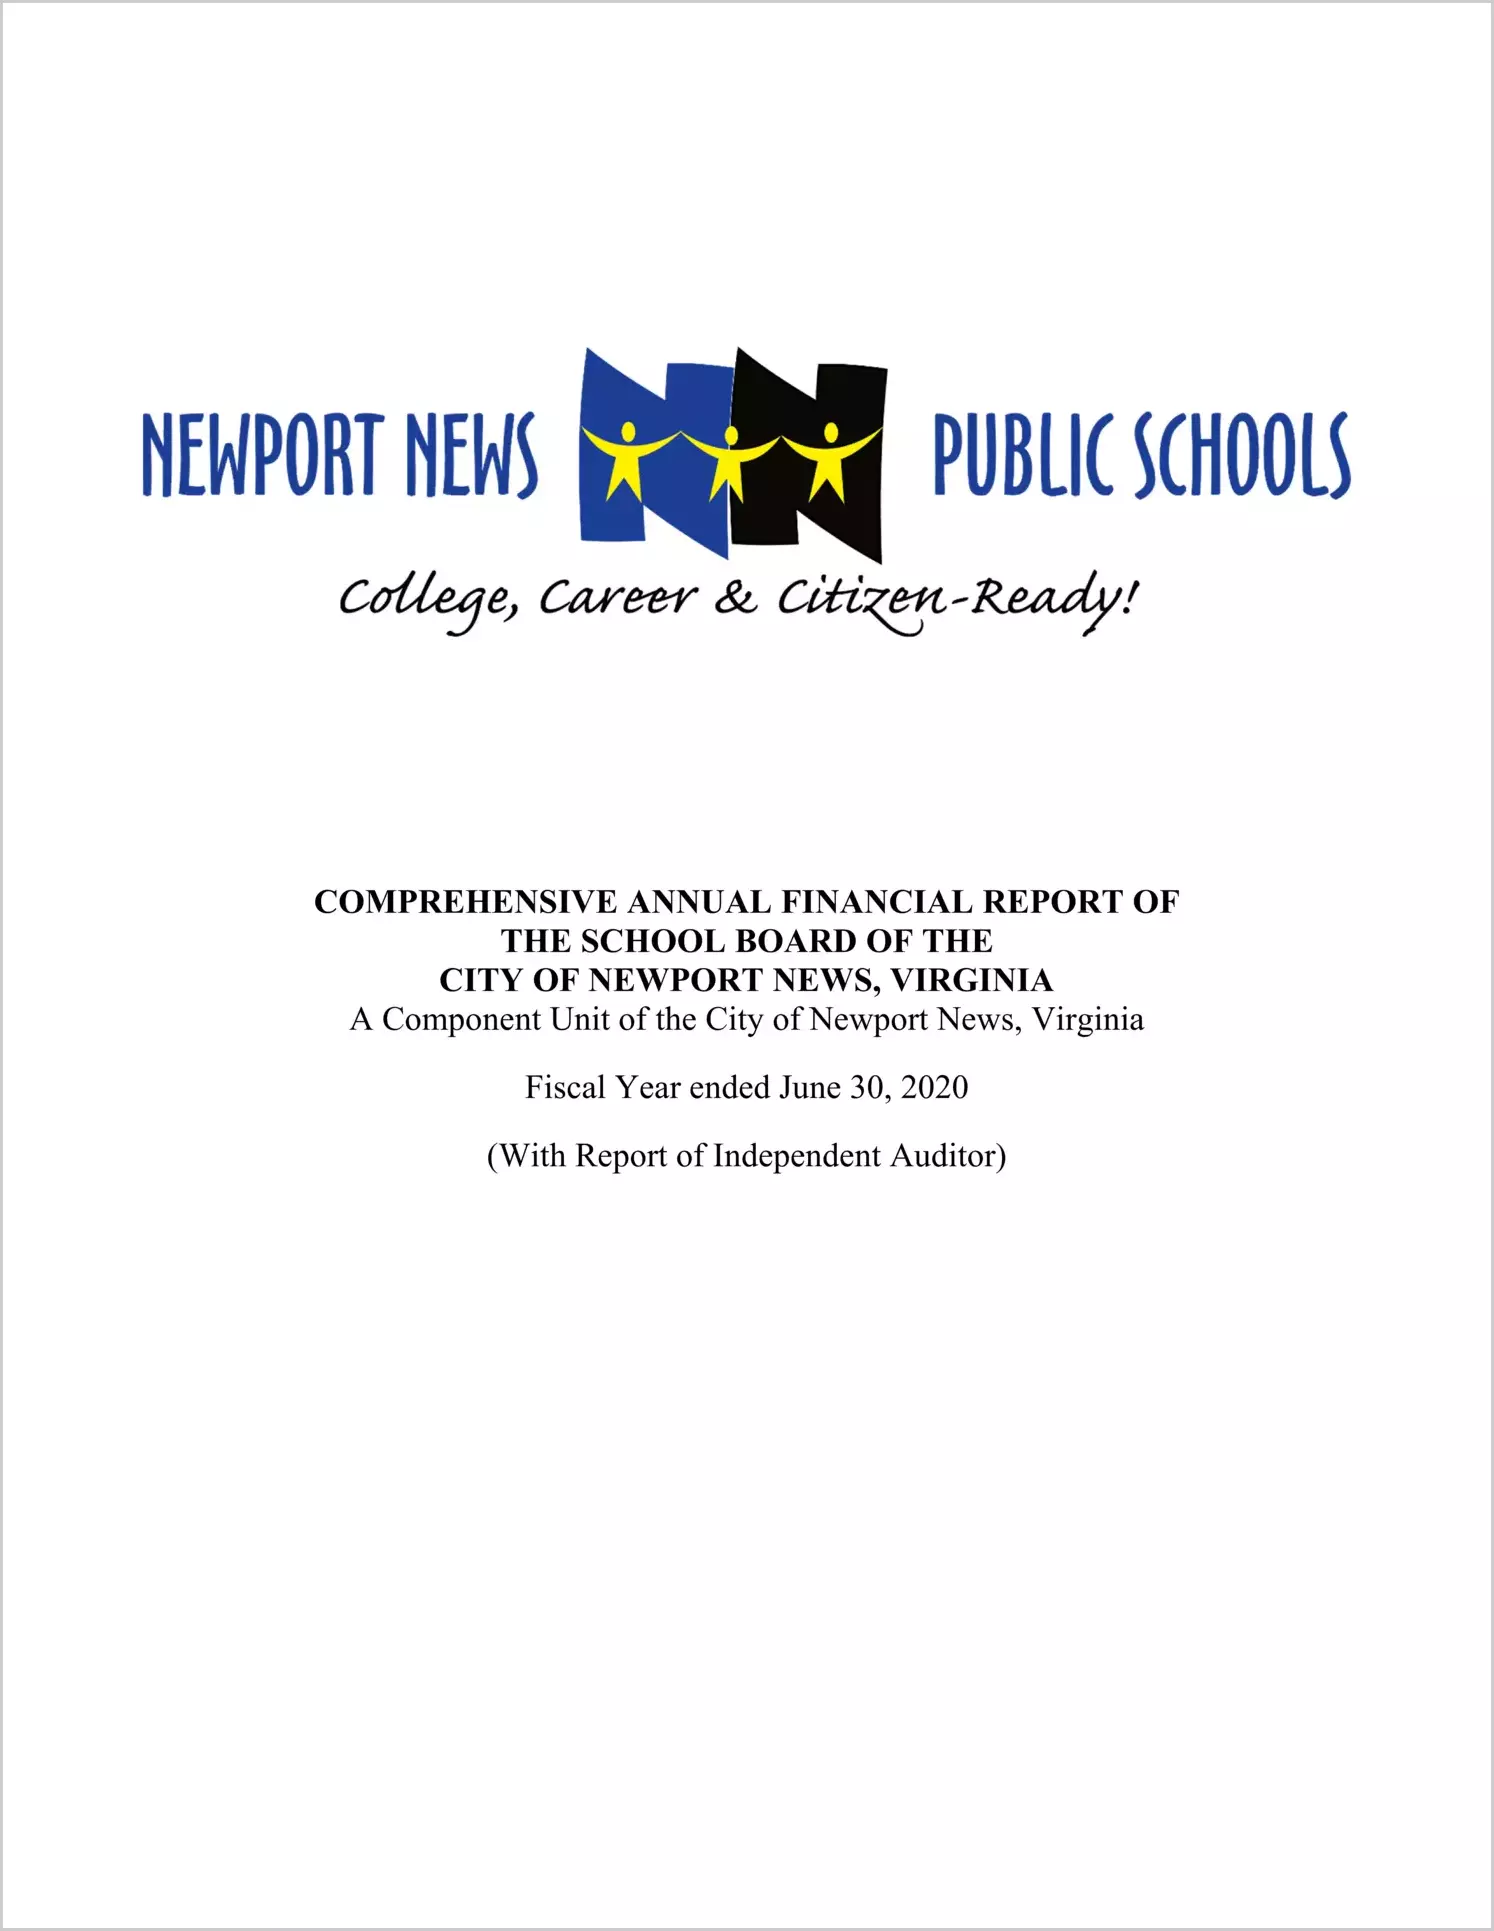 2020 Public Schools Annual Financial Report for City of Newport News